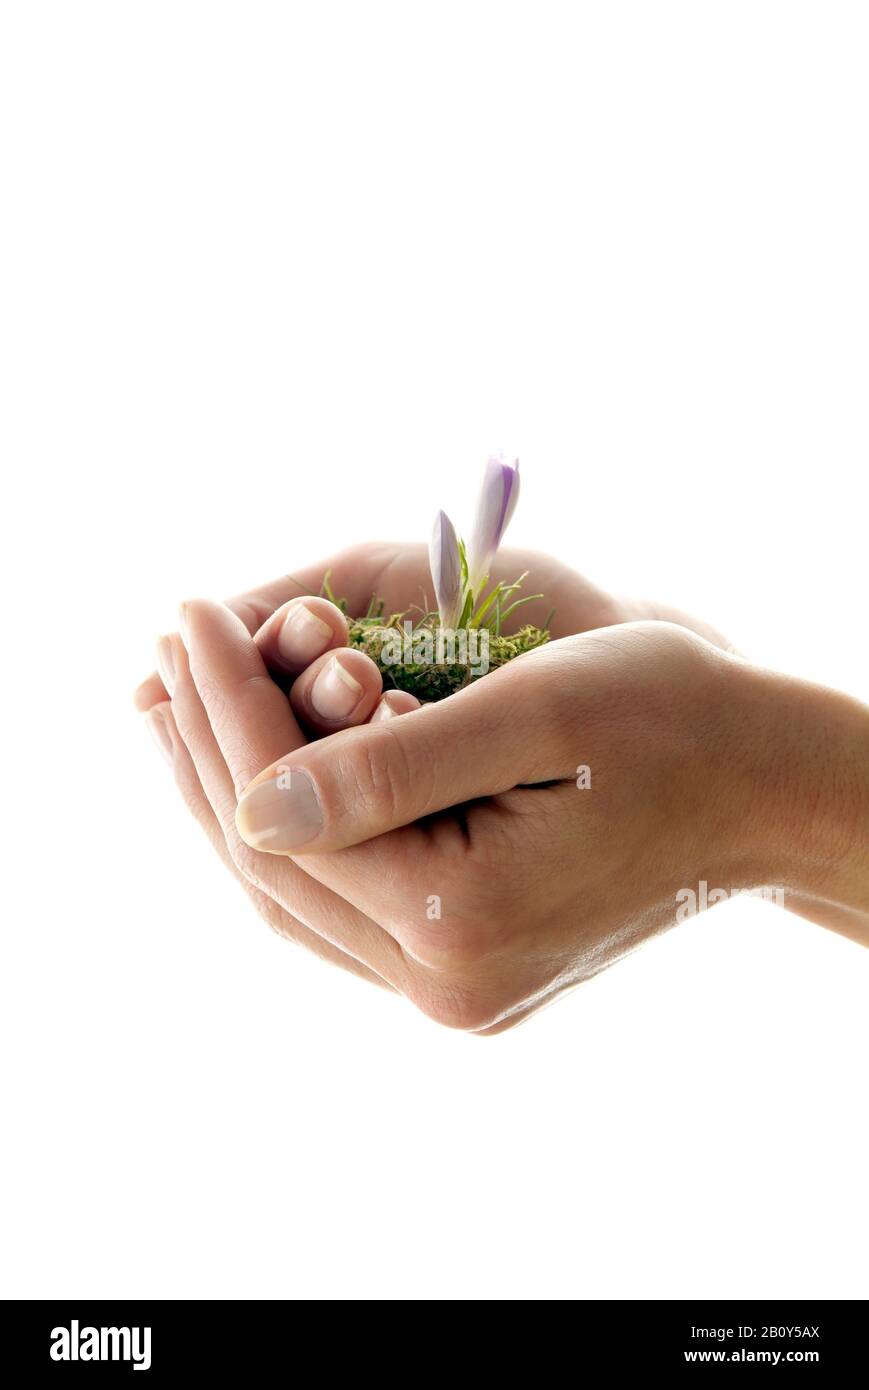 Hand with crocus flower Stock Photo